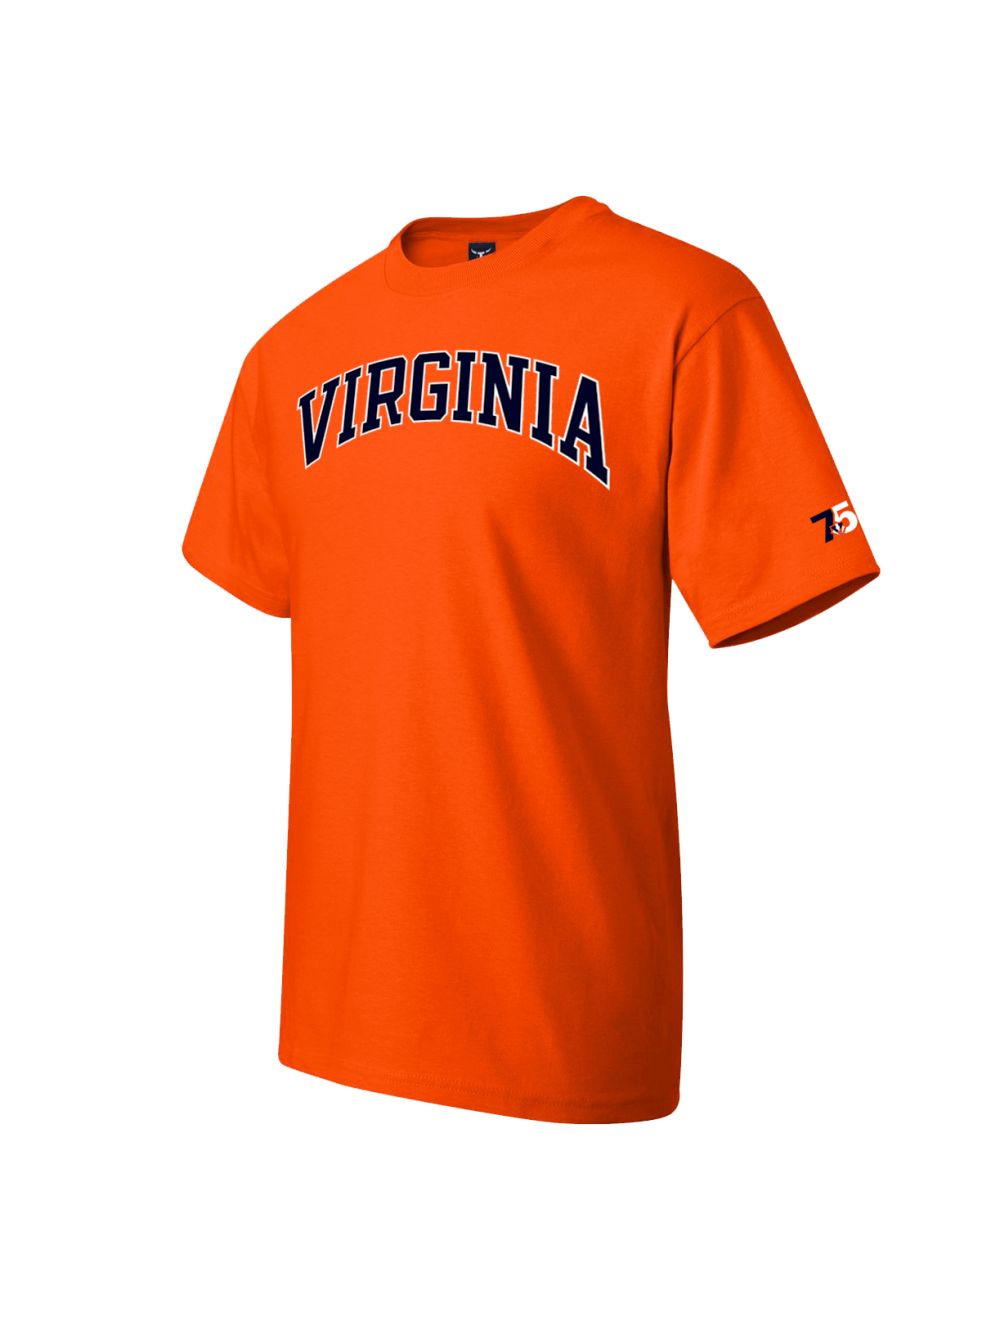 https://mincers.com/media/catalog/product/cache/33958134c3eee94557aec7c86a48adbc/rdi/rdi/hanes-beefy-tee-orange-t-shirt-beefy-14-orange-tee-arch-va_1.jpg